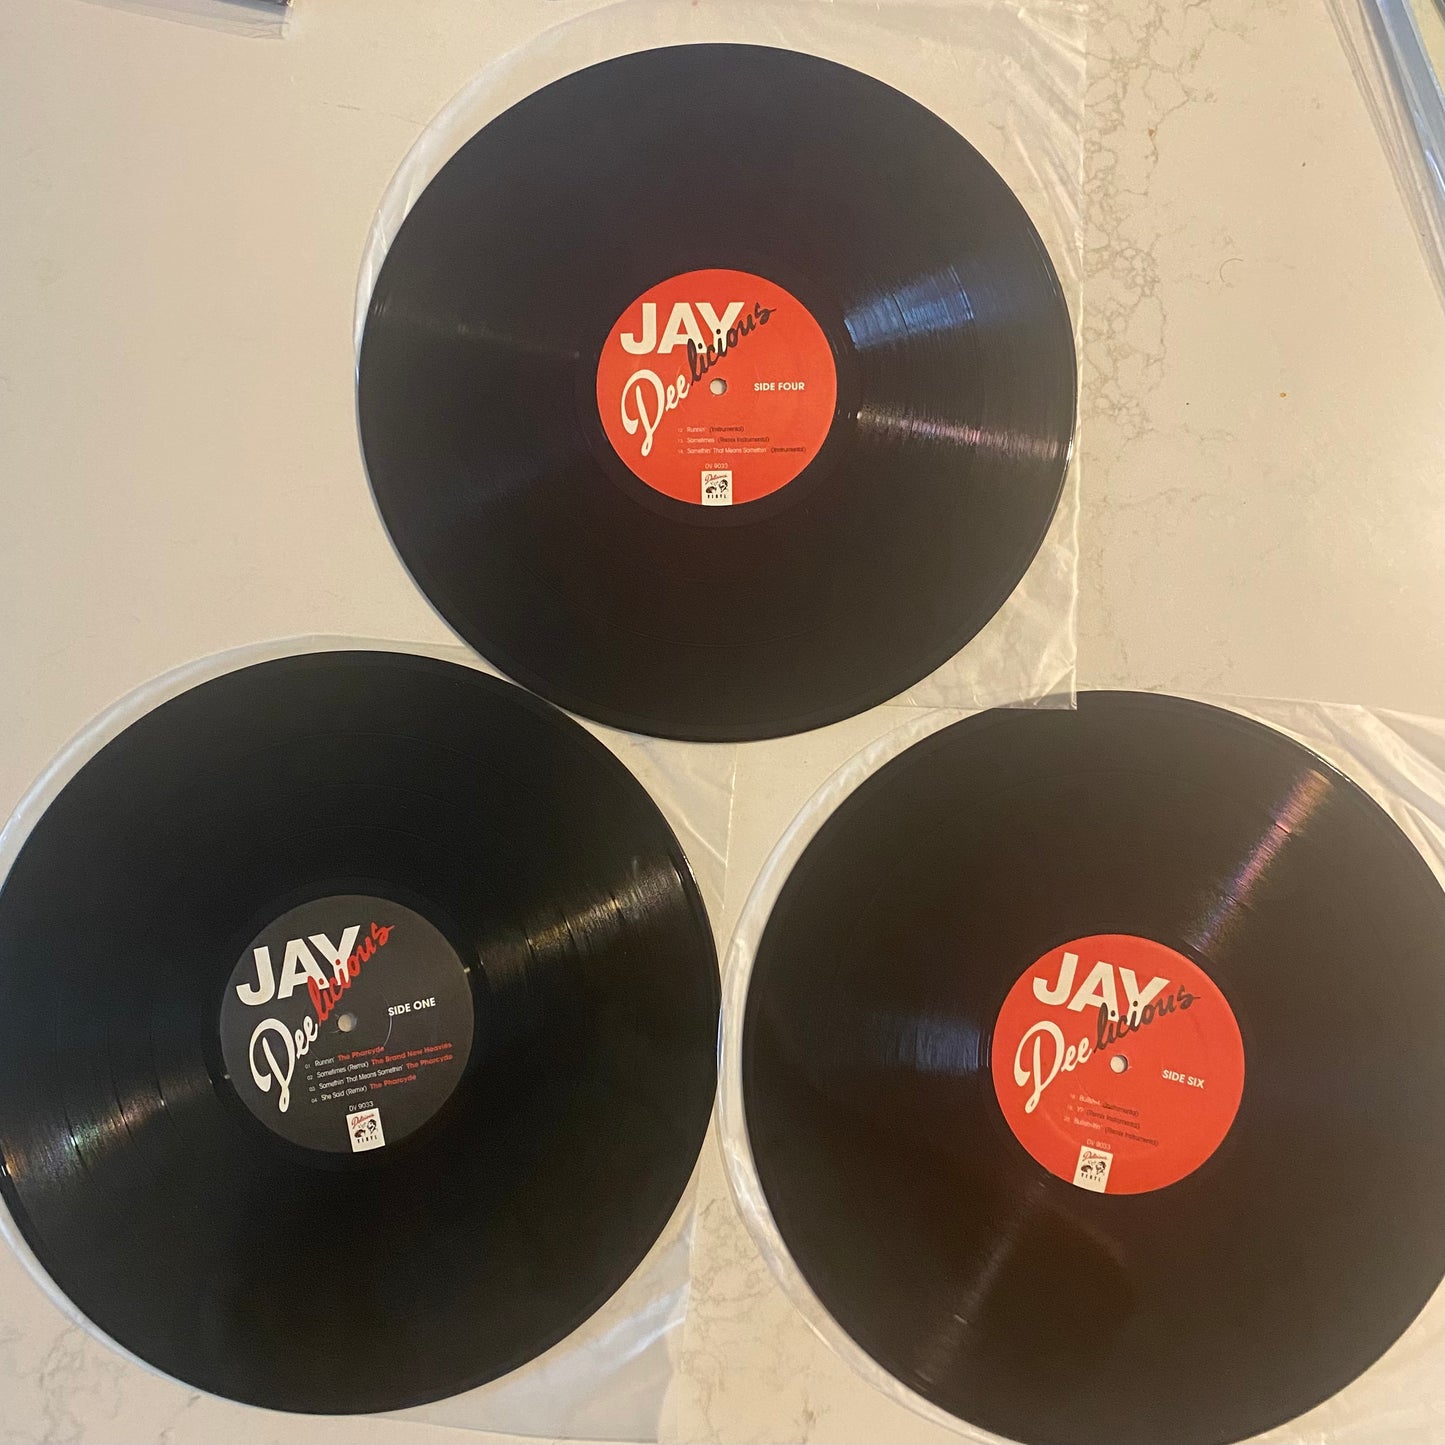 Jay Dee - Jay Deelicious: The Delicious Vinyl Years 95-98 (3xLP, Comp)